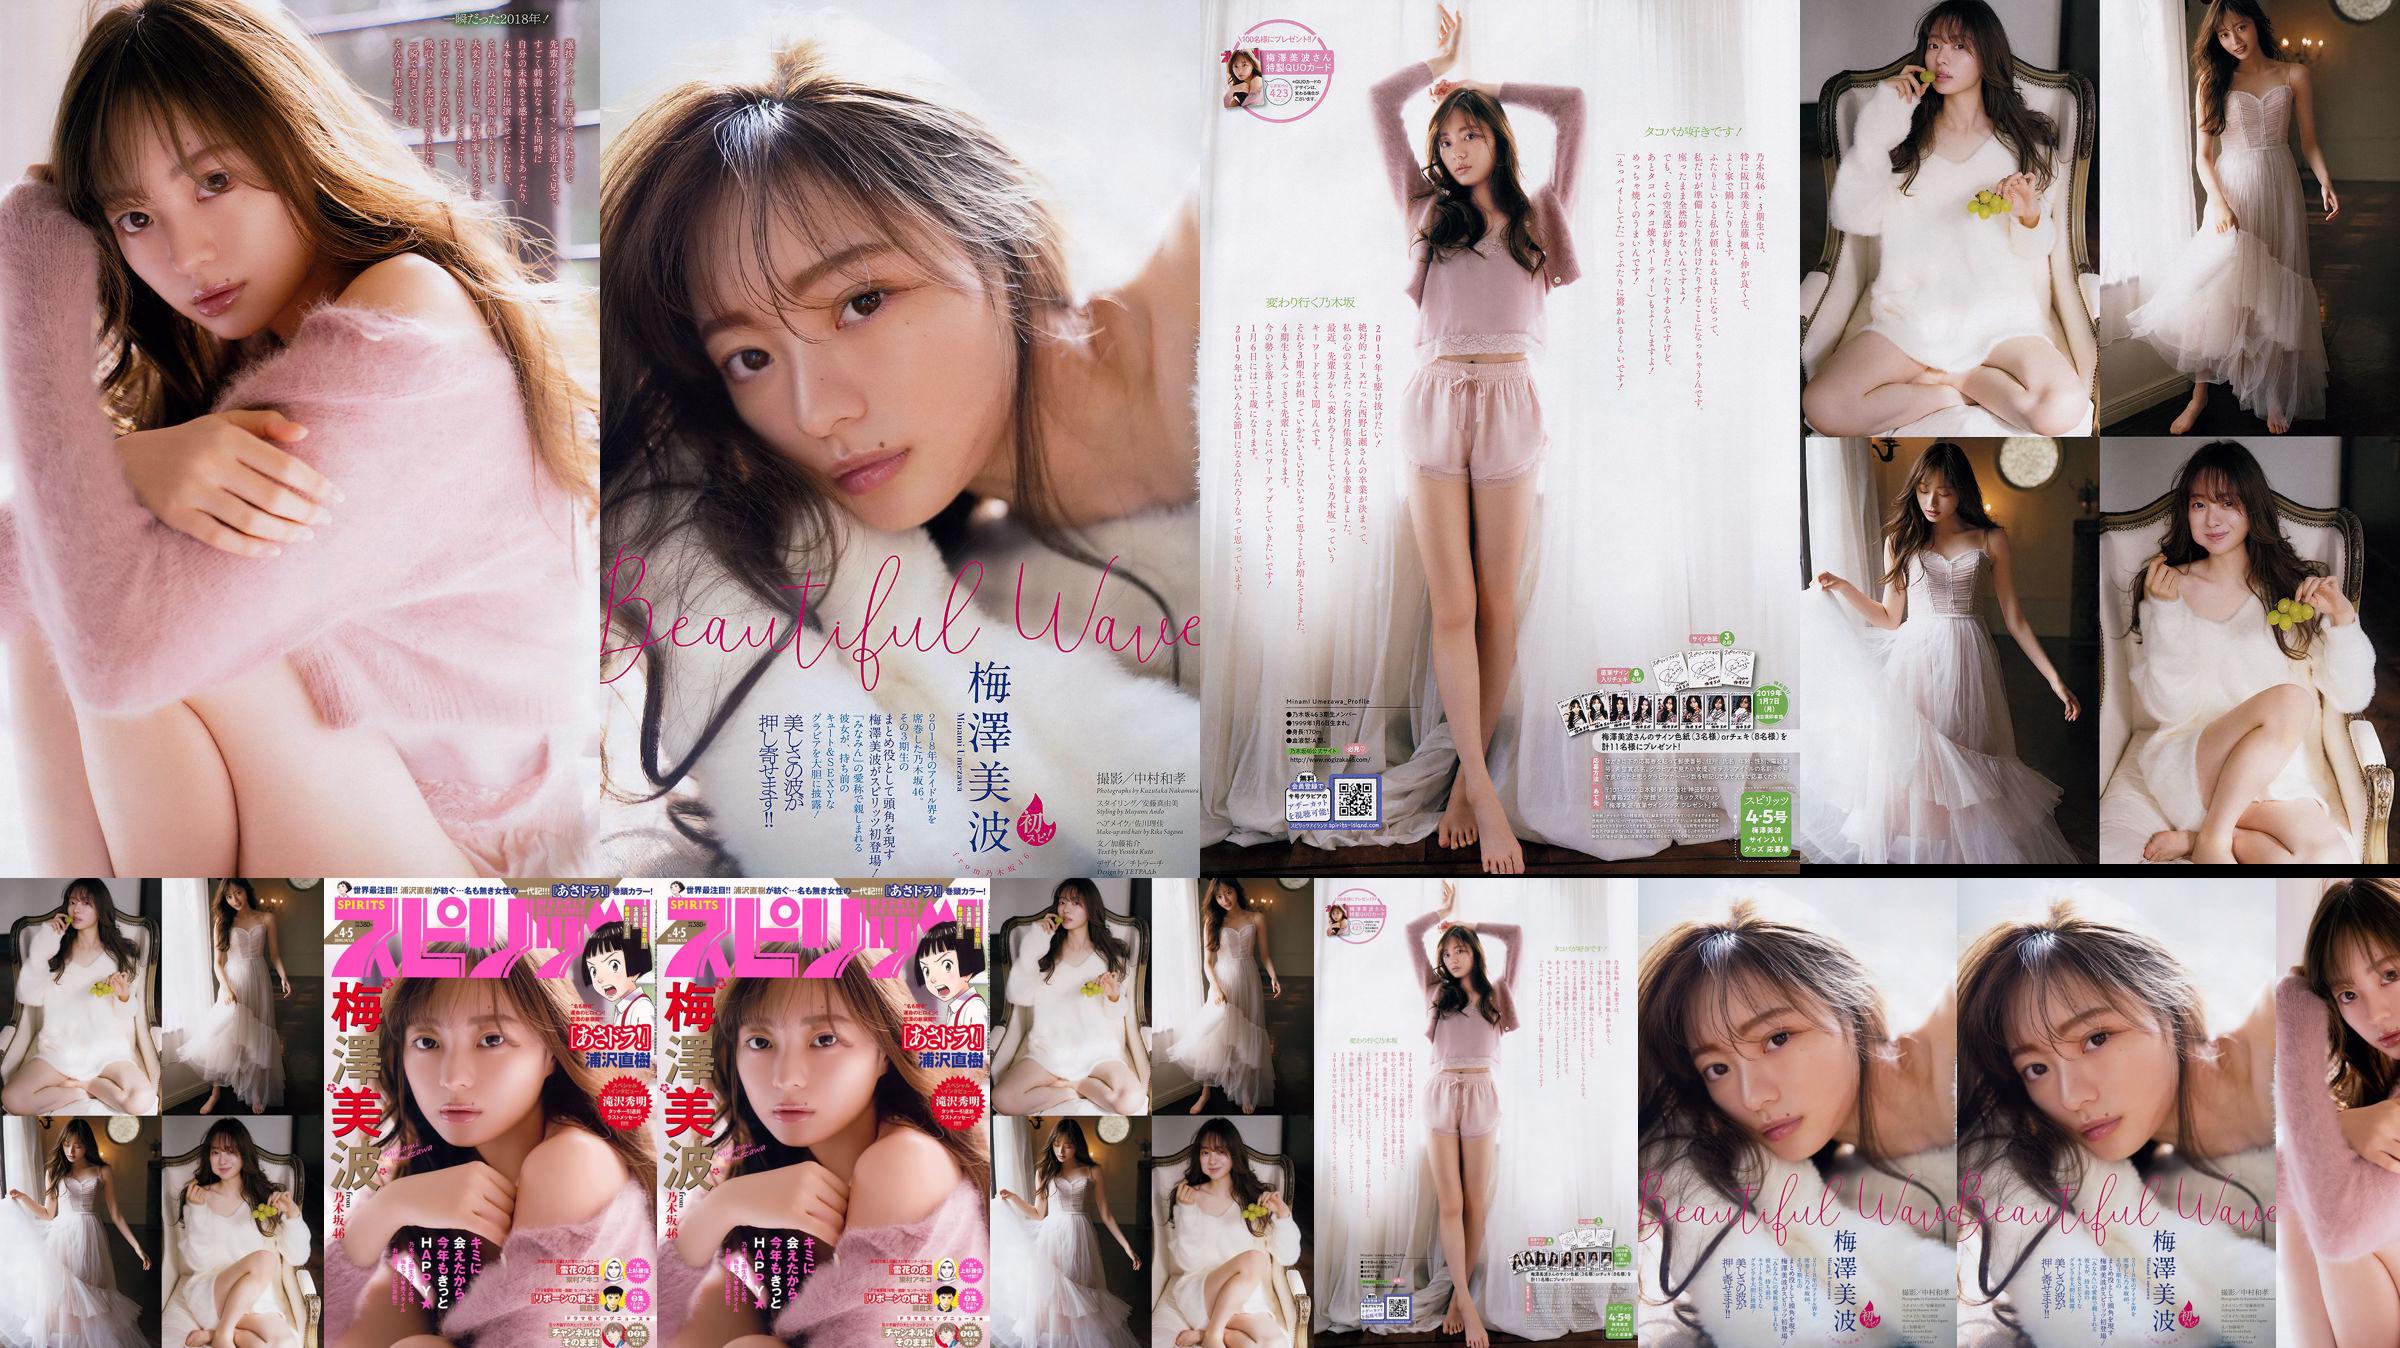 [Grands esprits de la bande dessinée hebdomadaire] Minami Umezawa 2019 N ° 04-05 Photo Magazine No.01ed9b Page 3